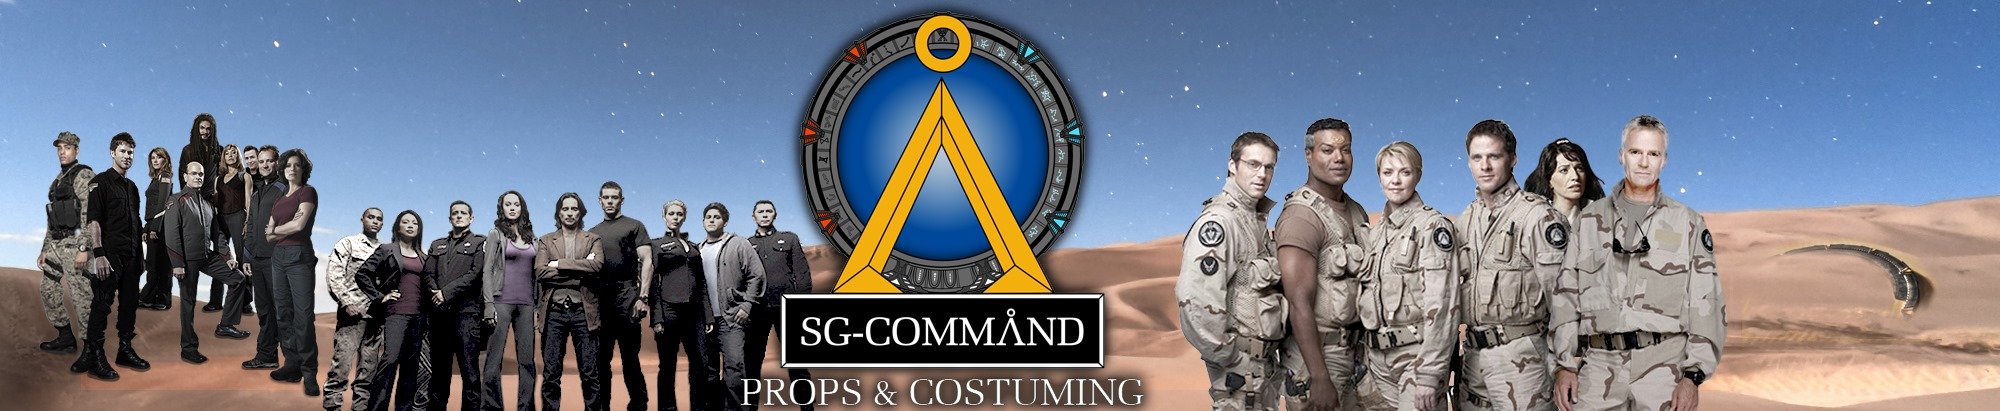 SG-Command